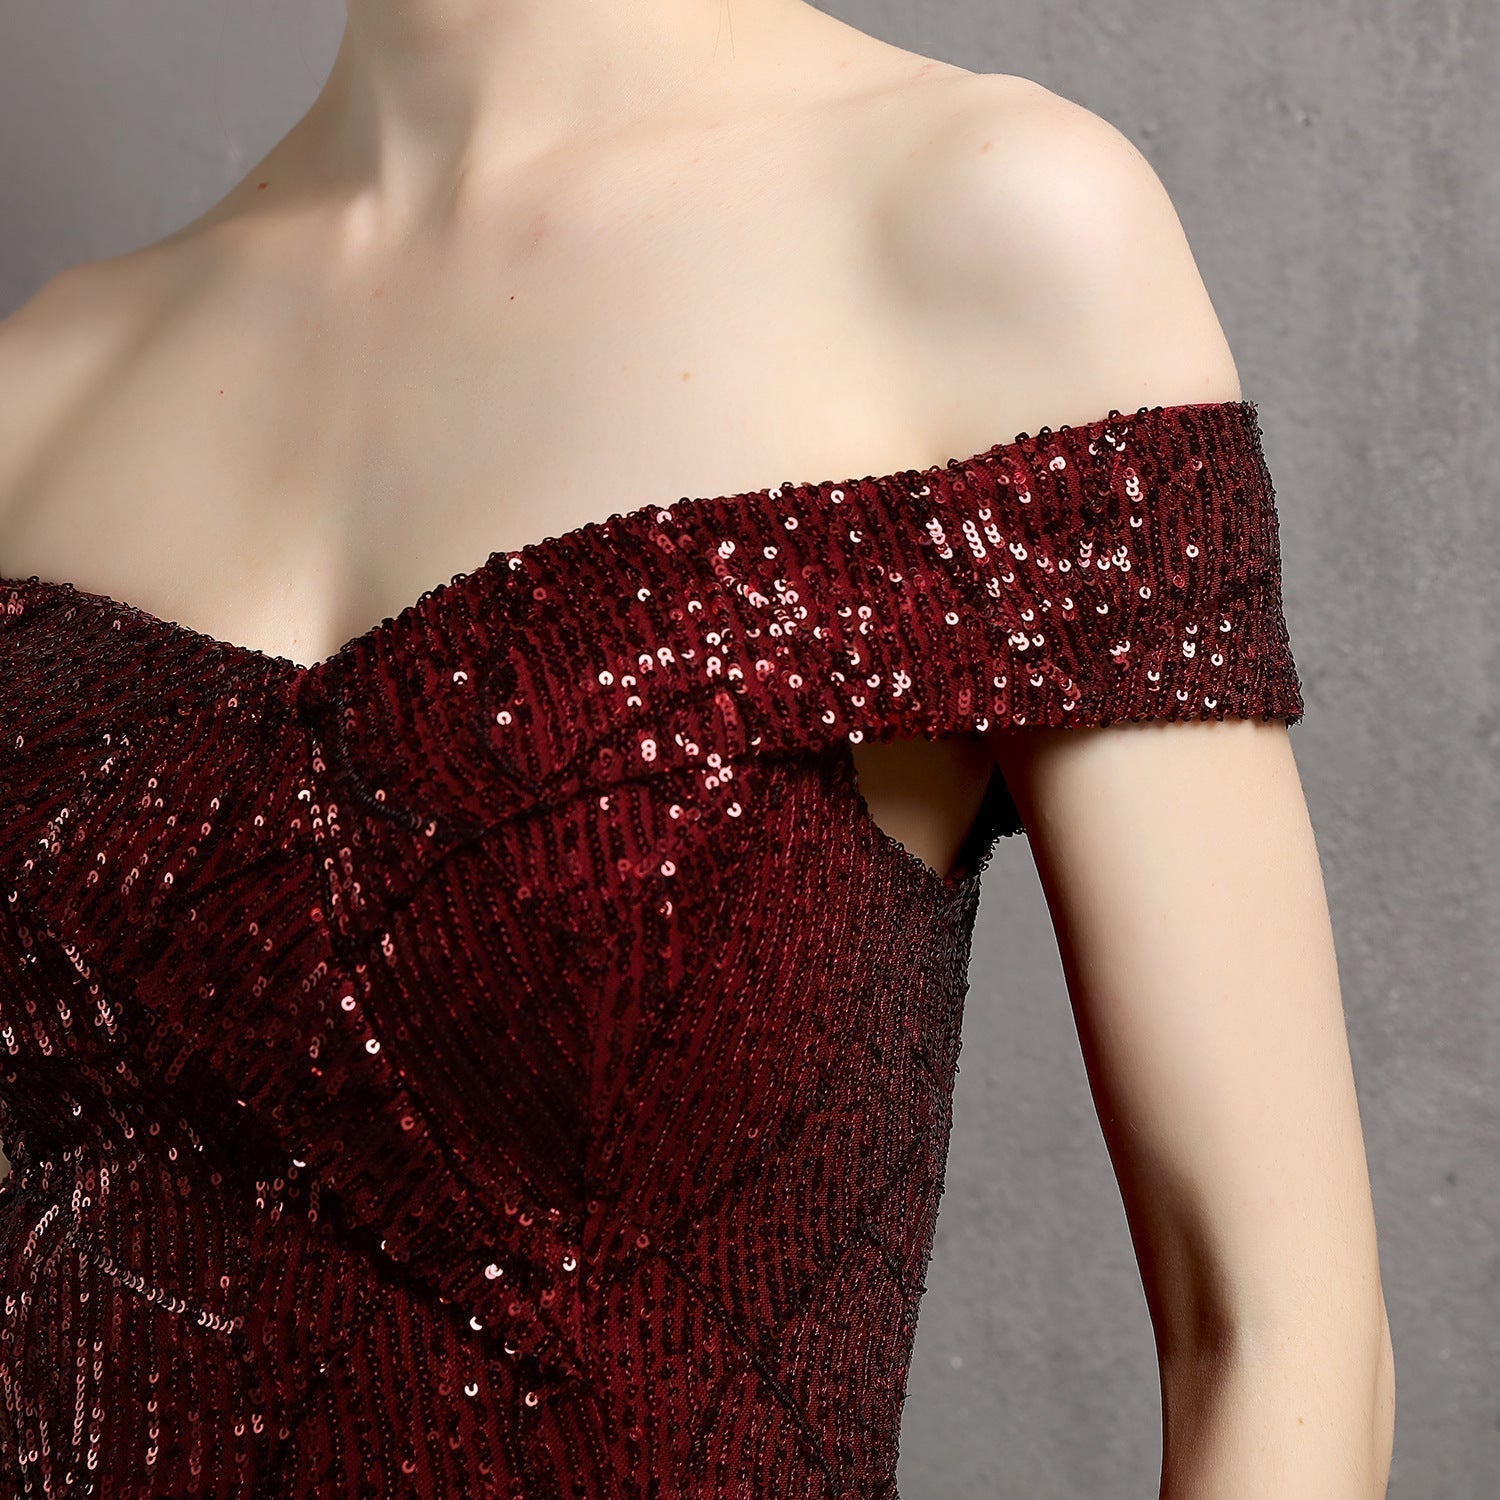 Clara Glitter Off the Shoulder Split Dress For Prom